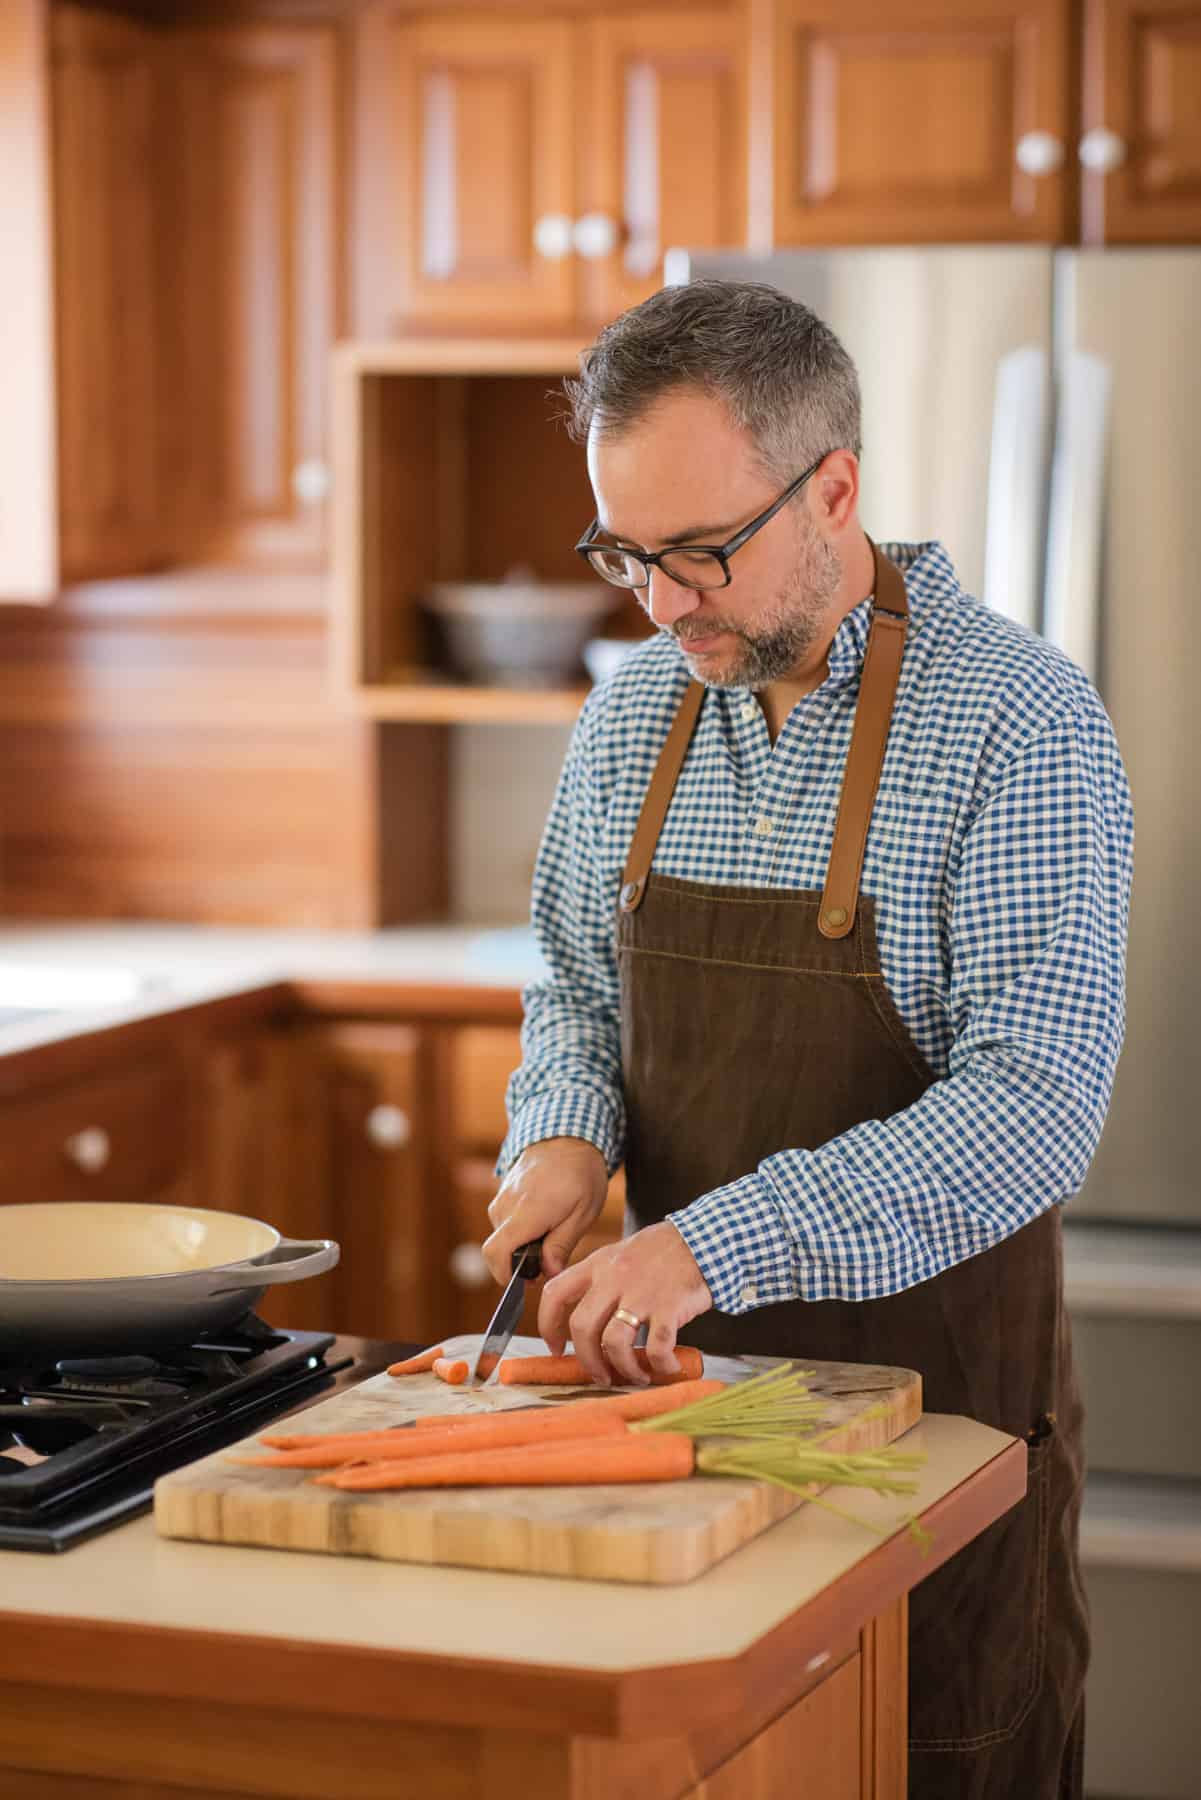 A chef cutting carrots on a cutting board.